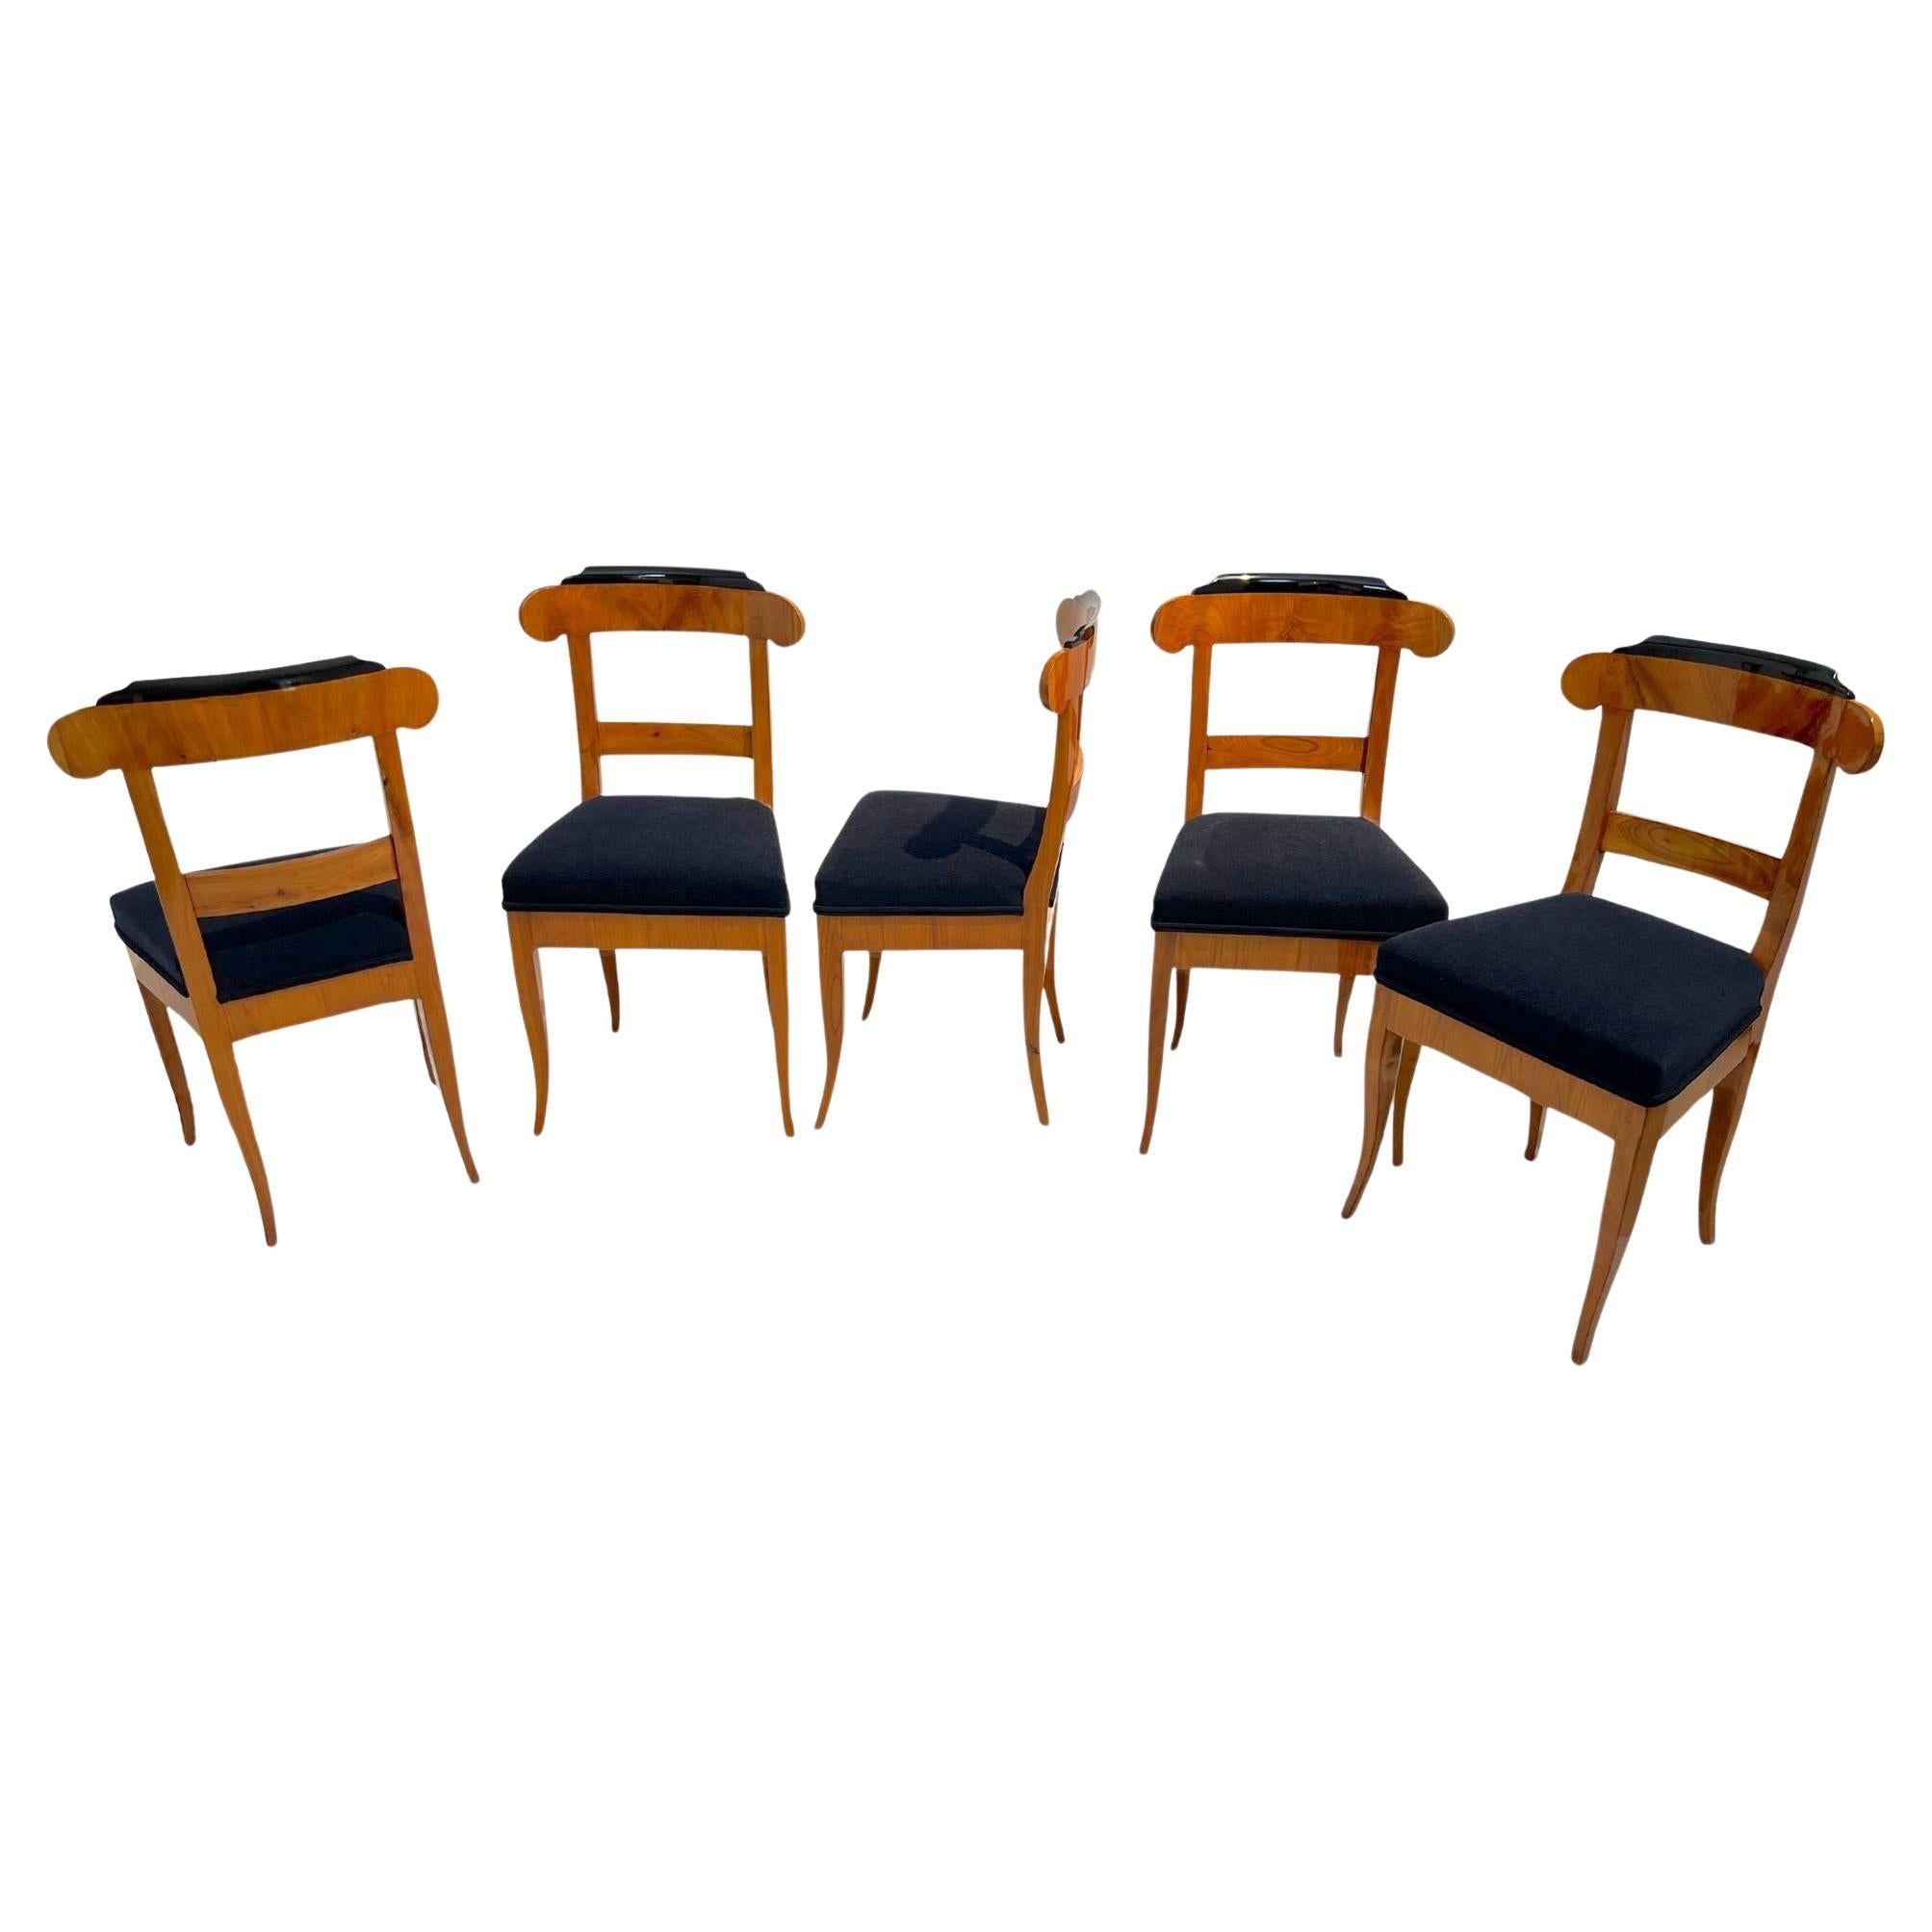 Set of Five Biedermeier Chairs, Cherry Wood, Germany circa 1830 For Sale